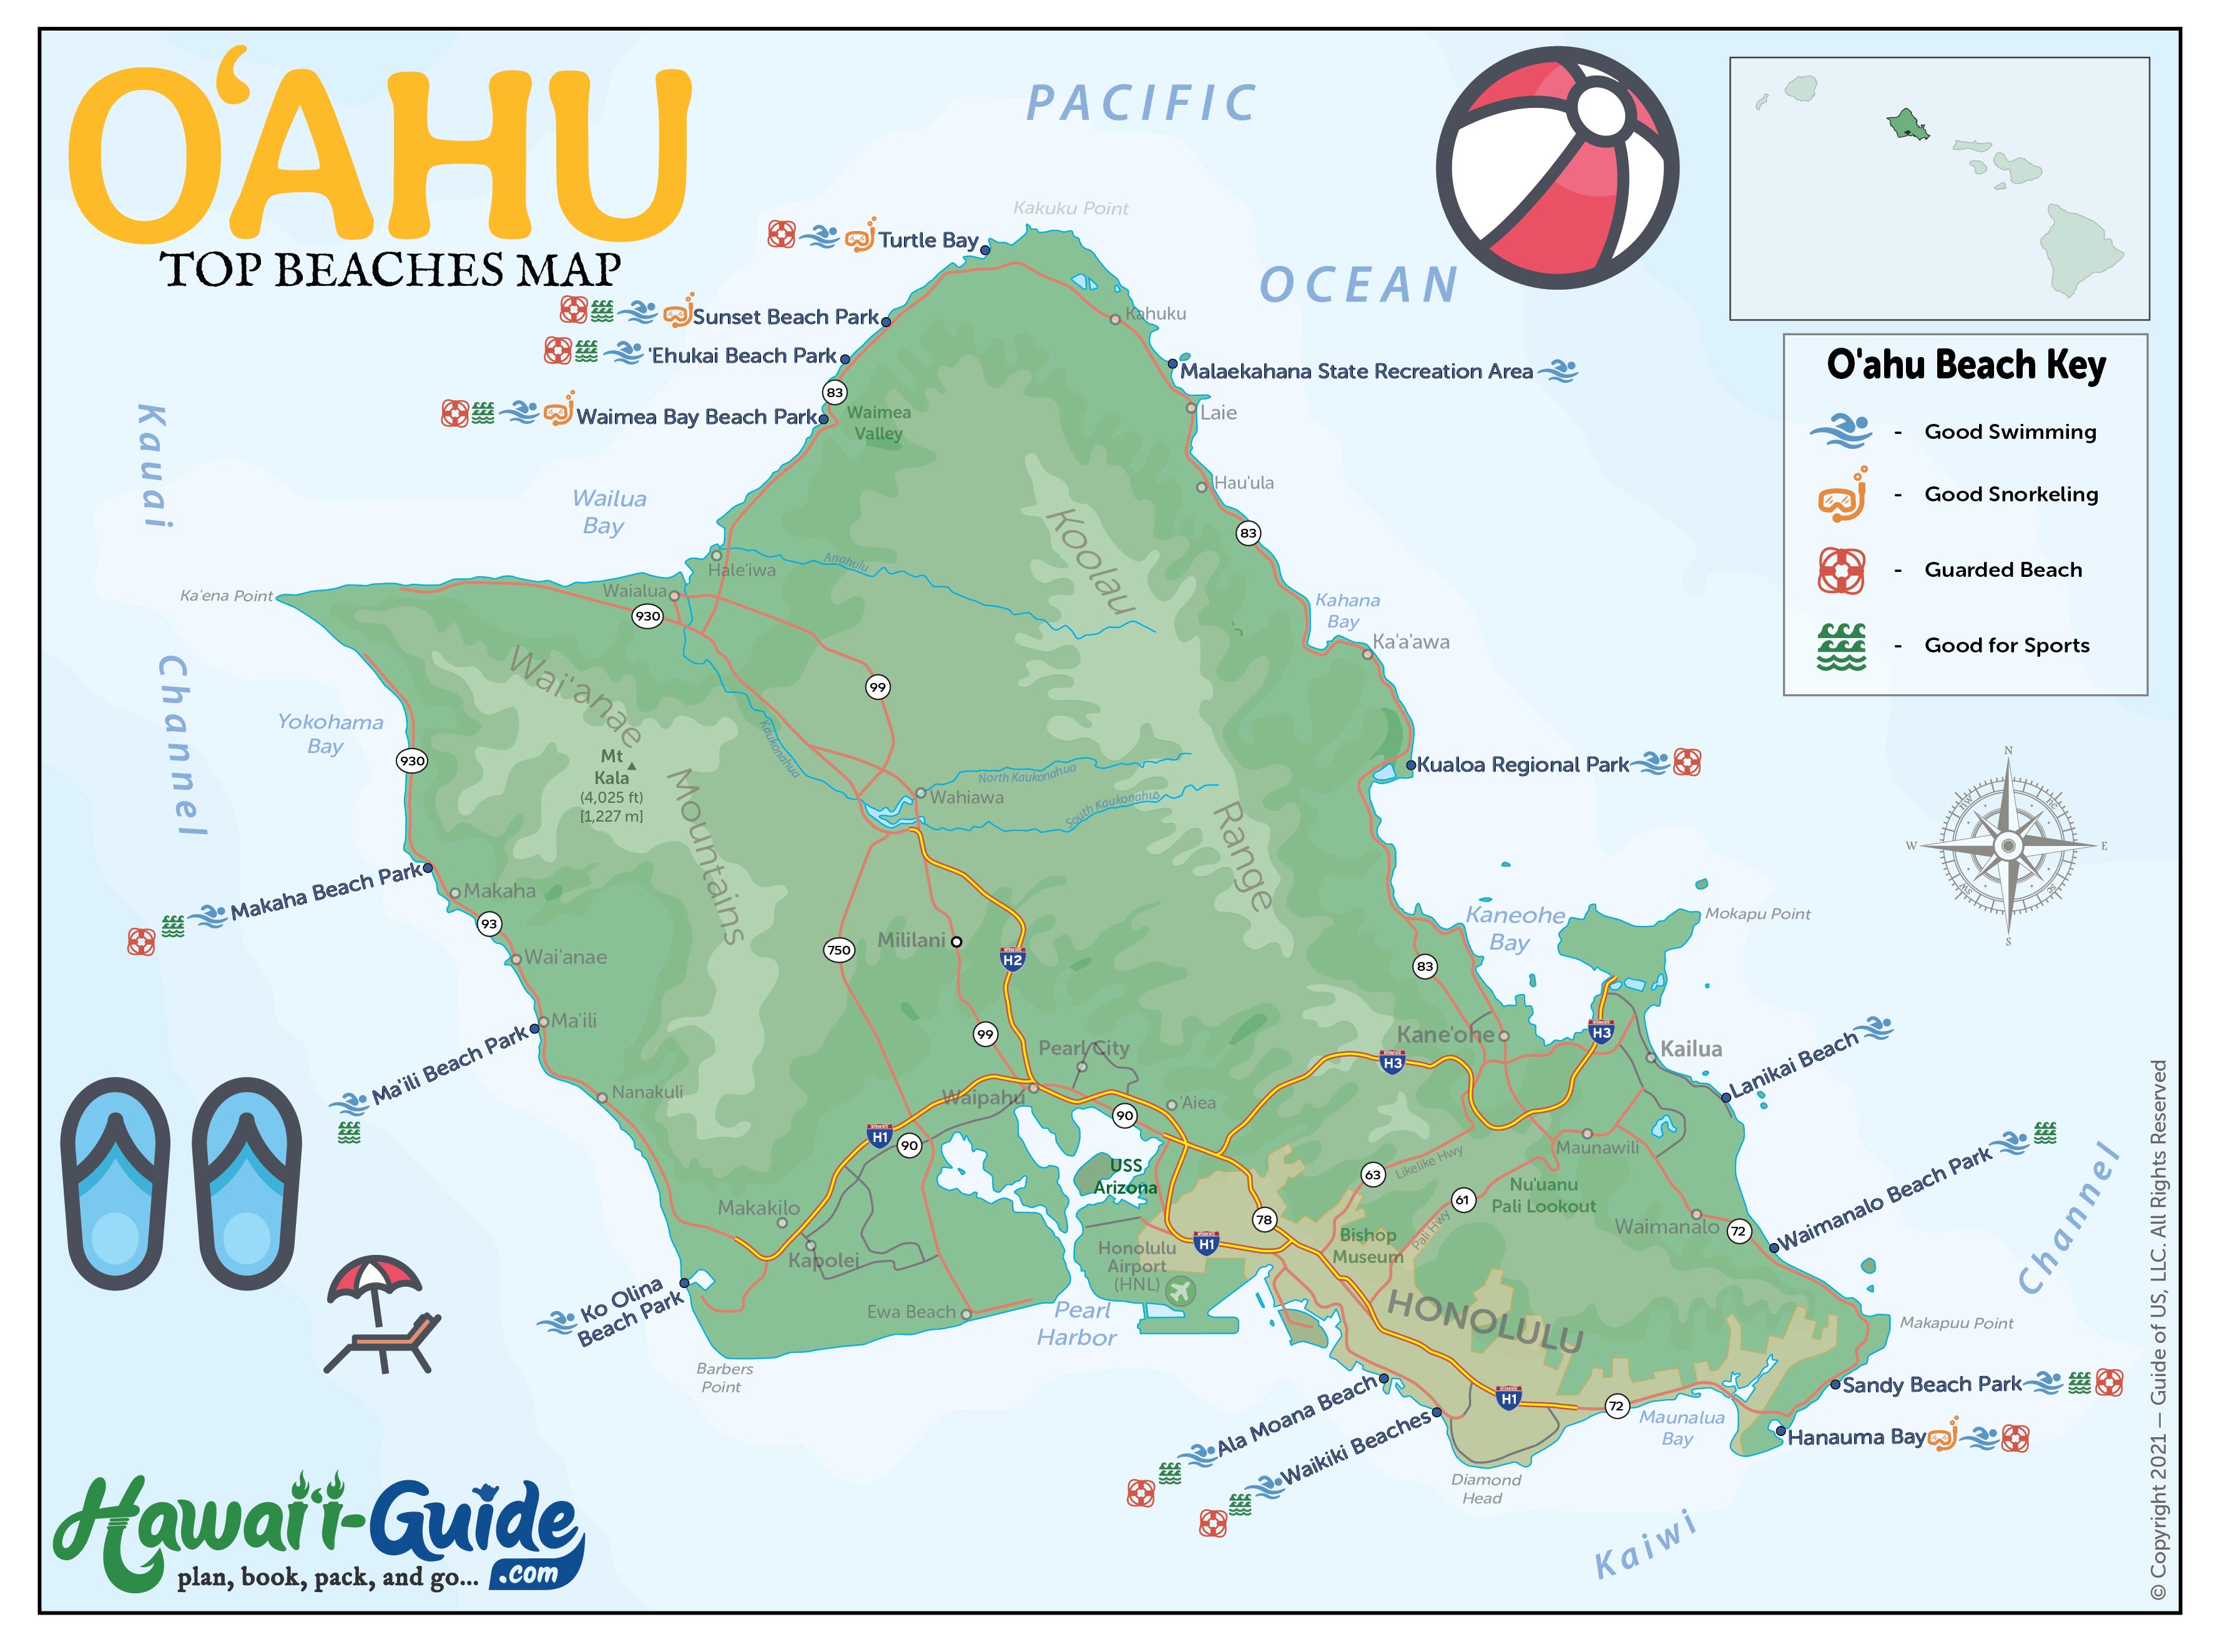 Hawaii Guide Oahu Beaches Map V5 